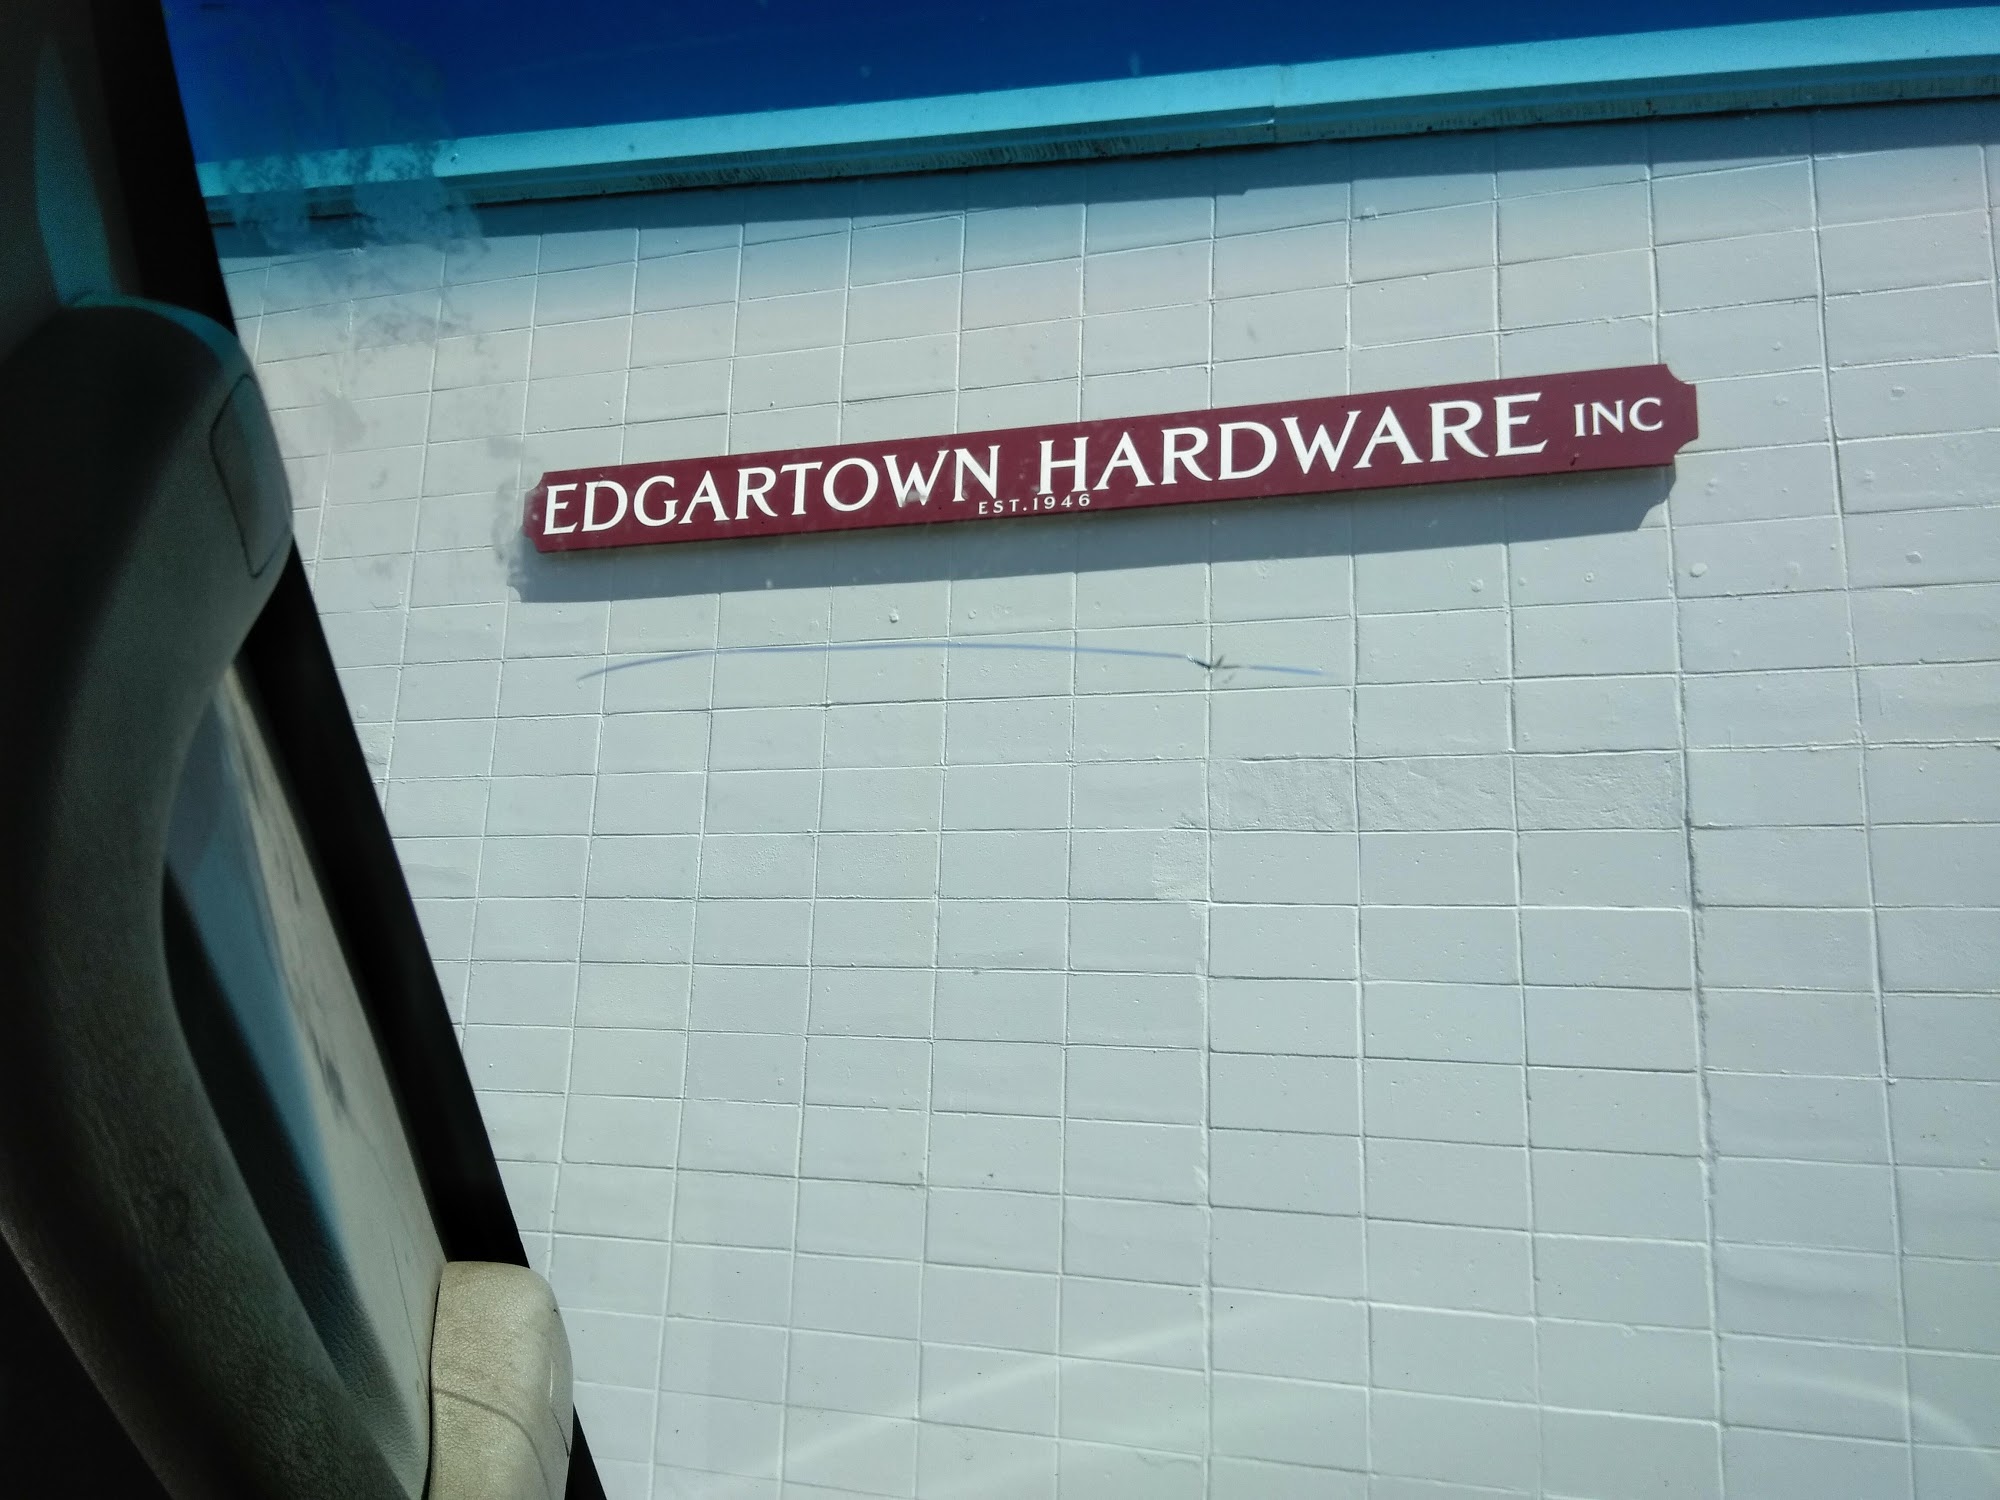 Edgartown Hardware Inc